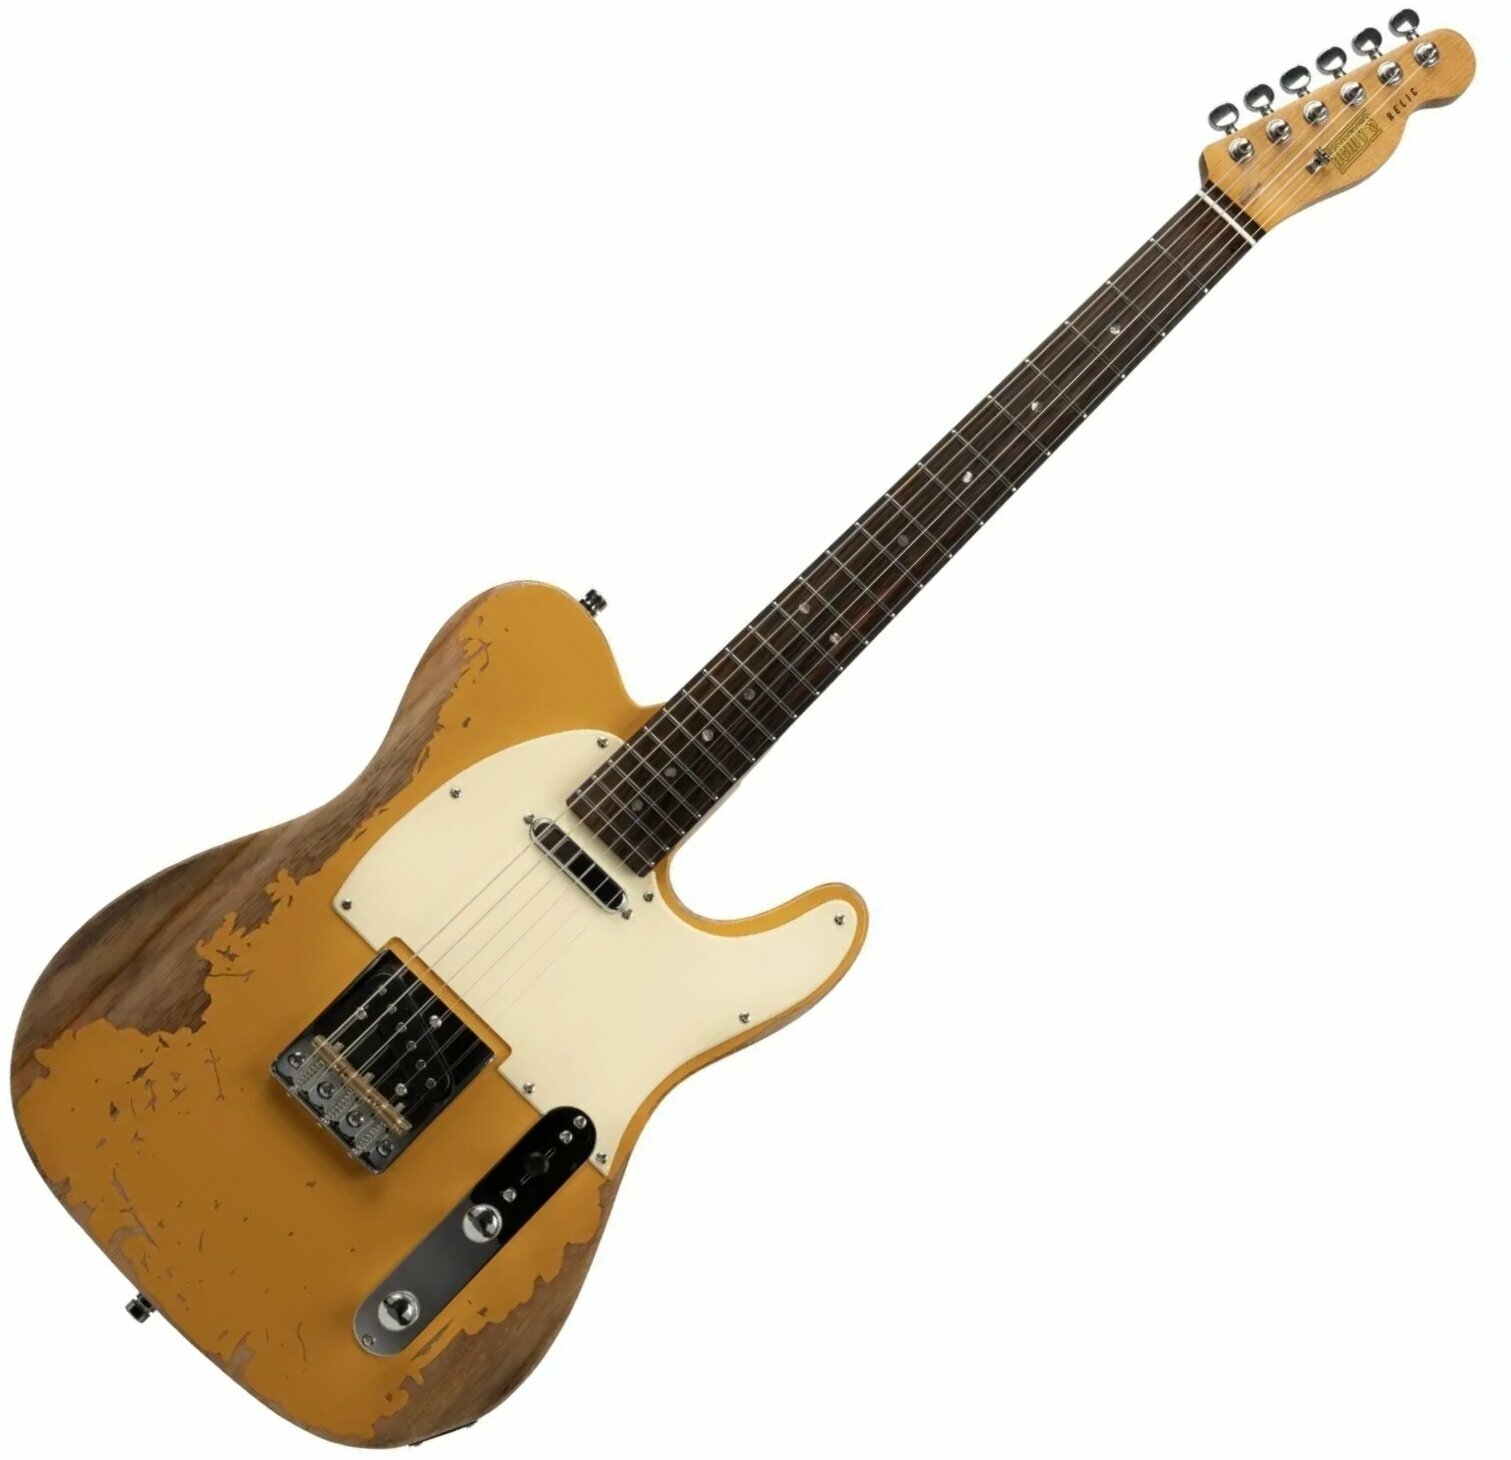 Elektrisk gitarr Henry's TL-1 The Comet Yellow Relic